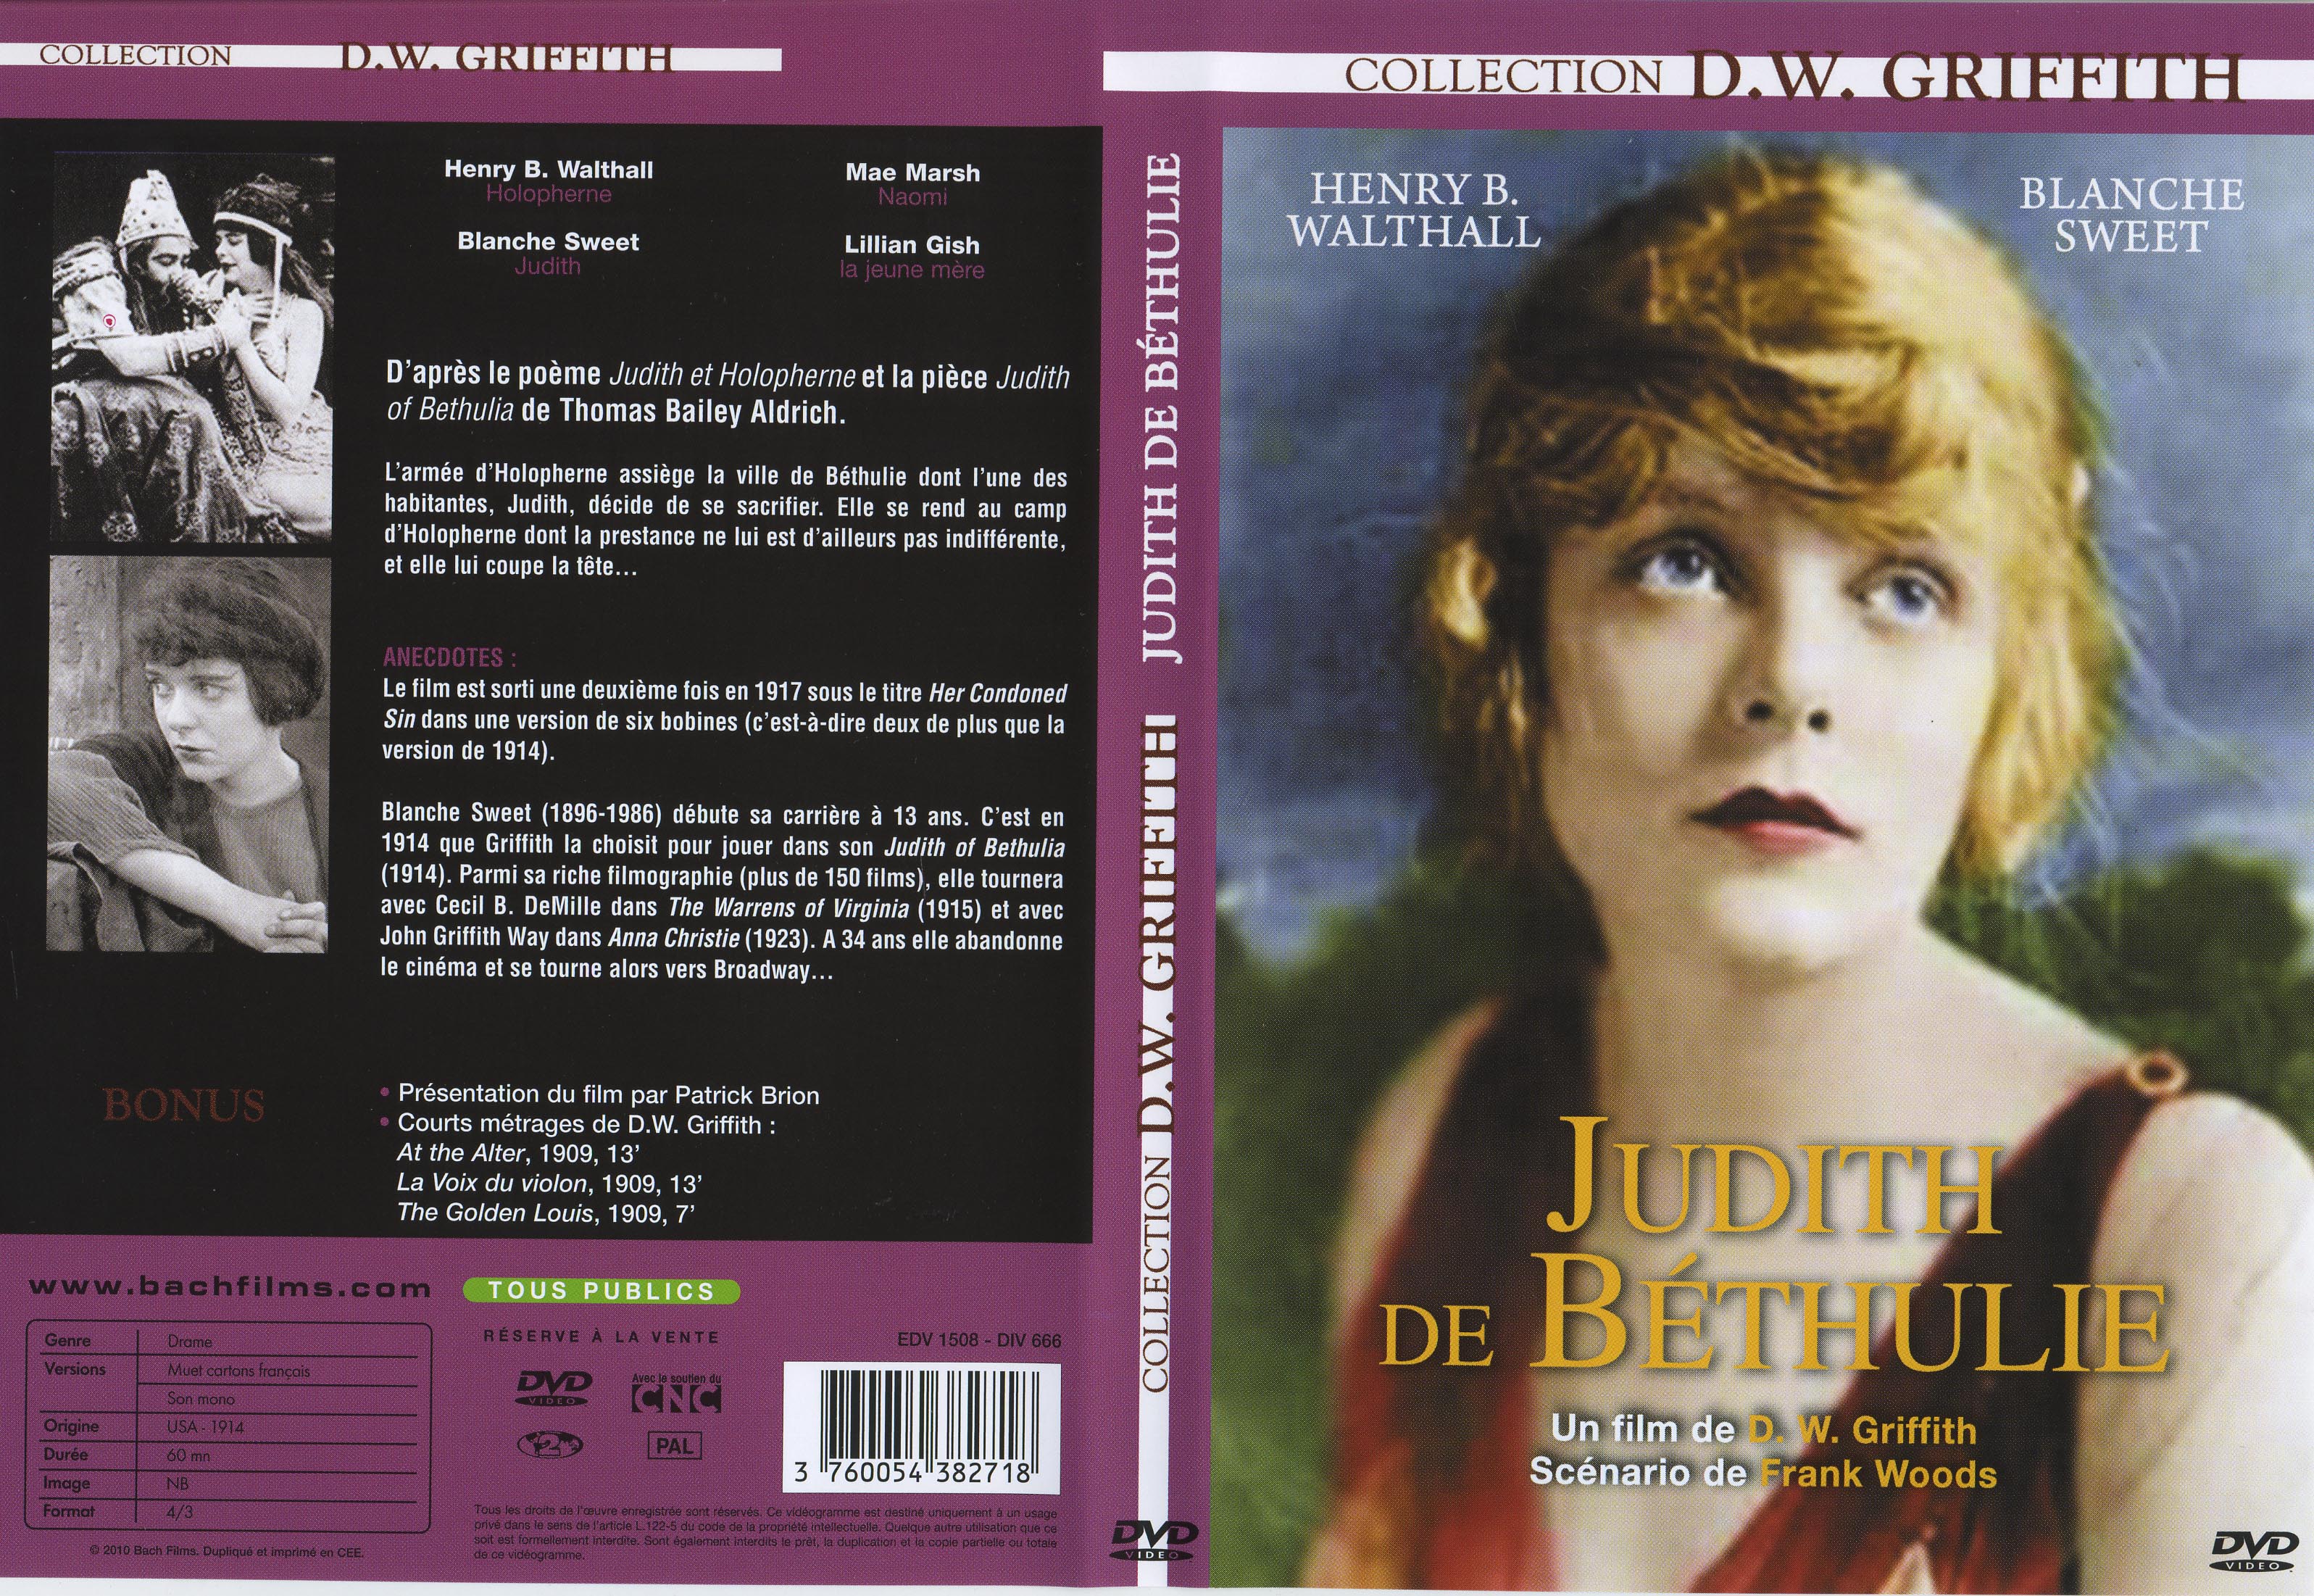 Jaquette DVD Judith de Bethulie